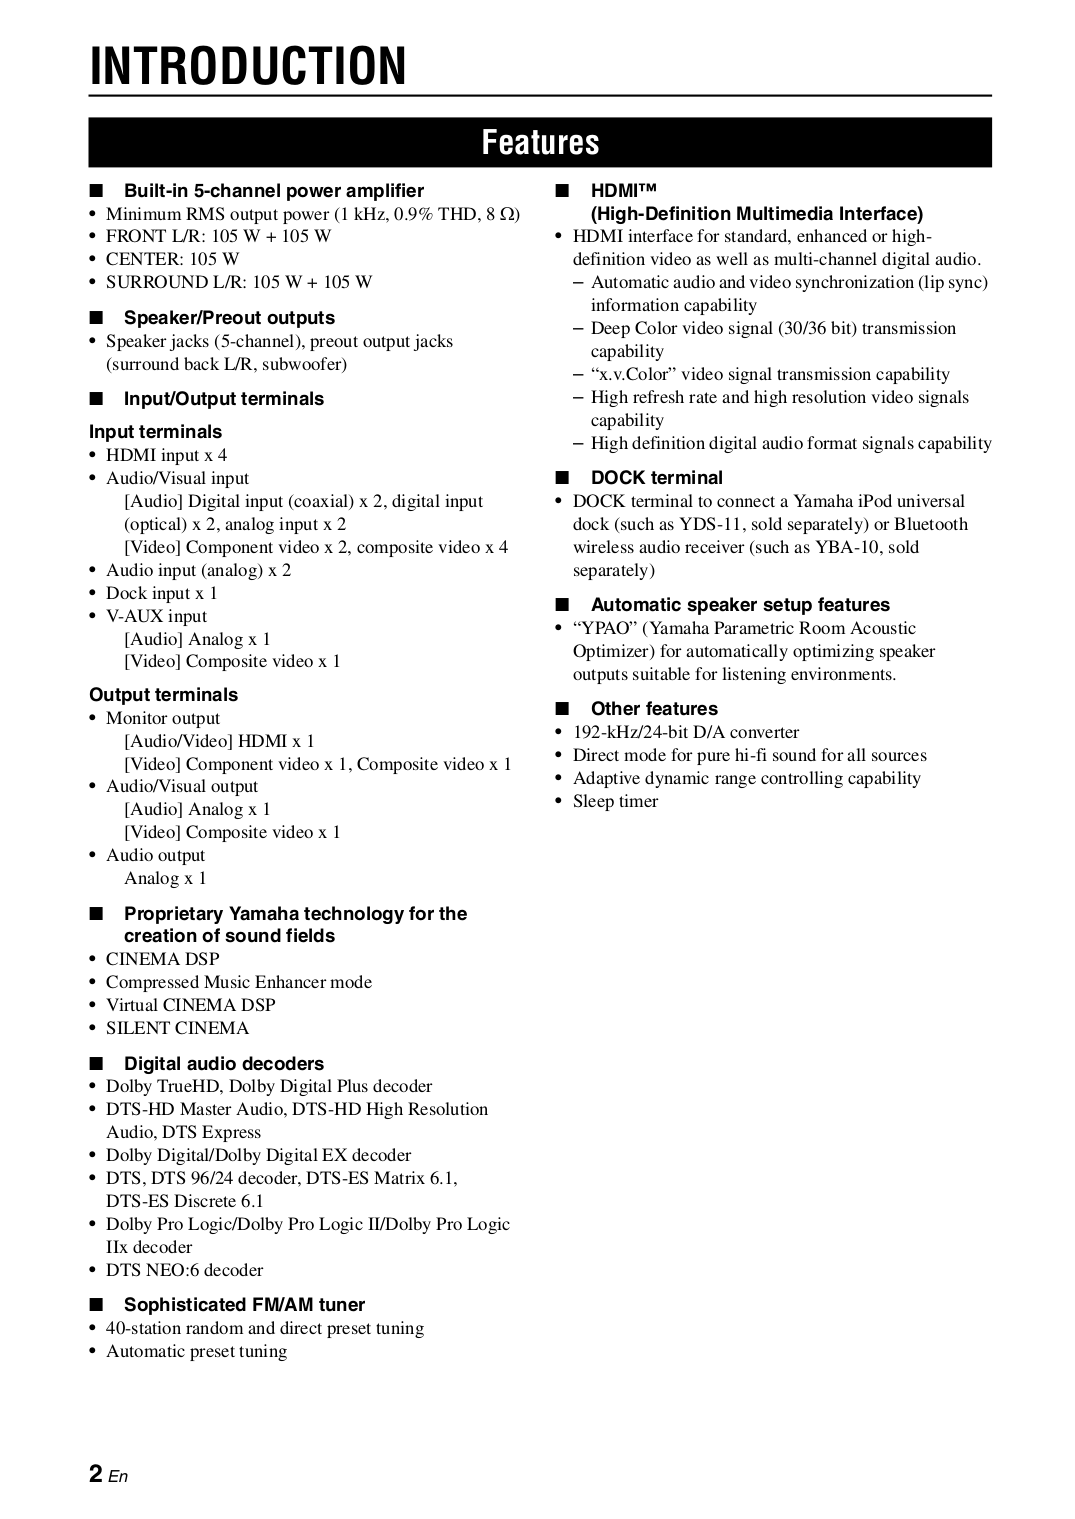 PDF manual for Yamaha Receiver RX-V465